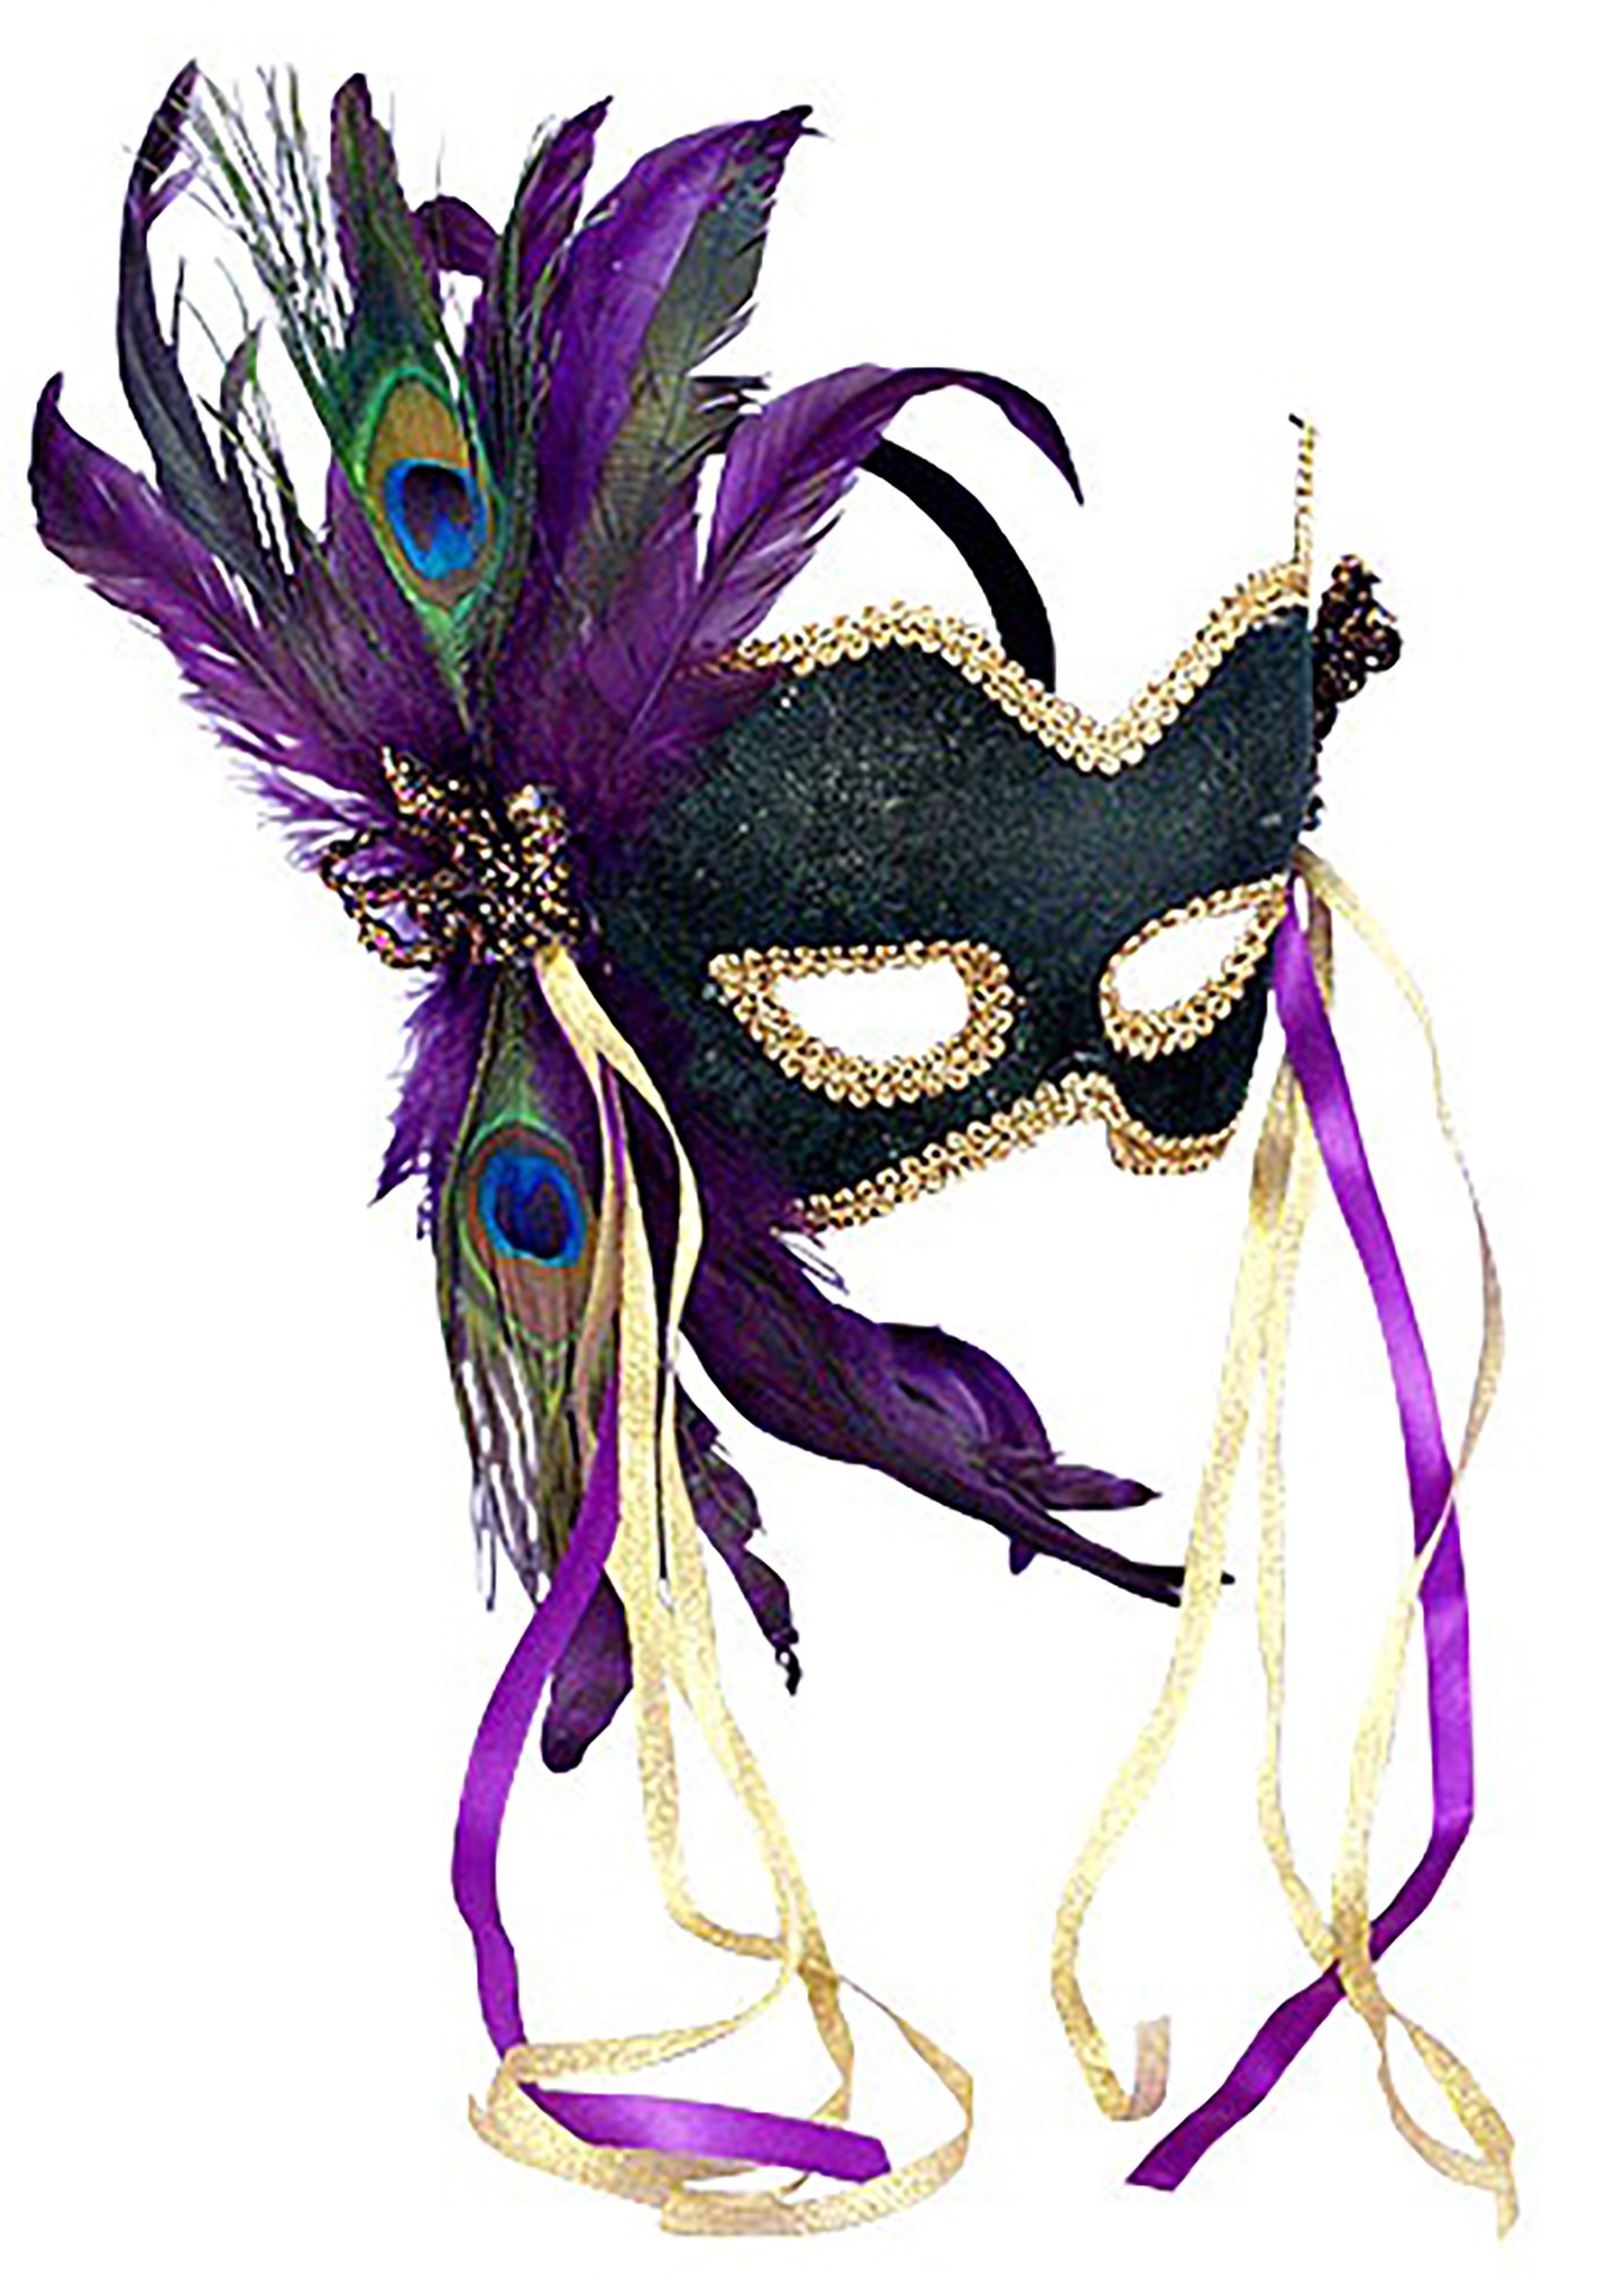 Mardi Gras masks